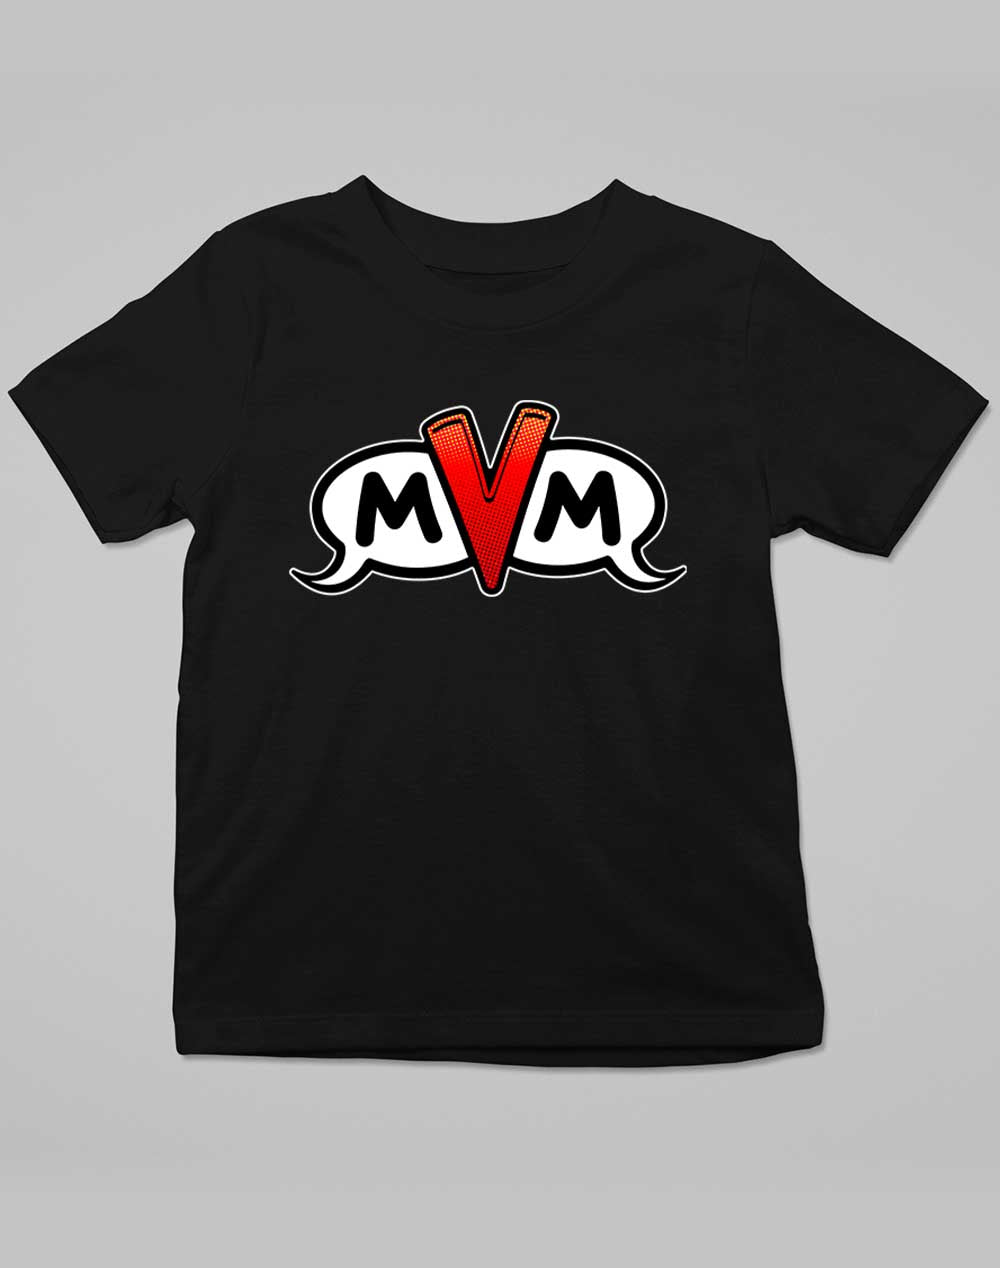 Deep Black - MvM Logo Kids T-Shirt